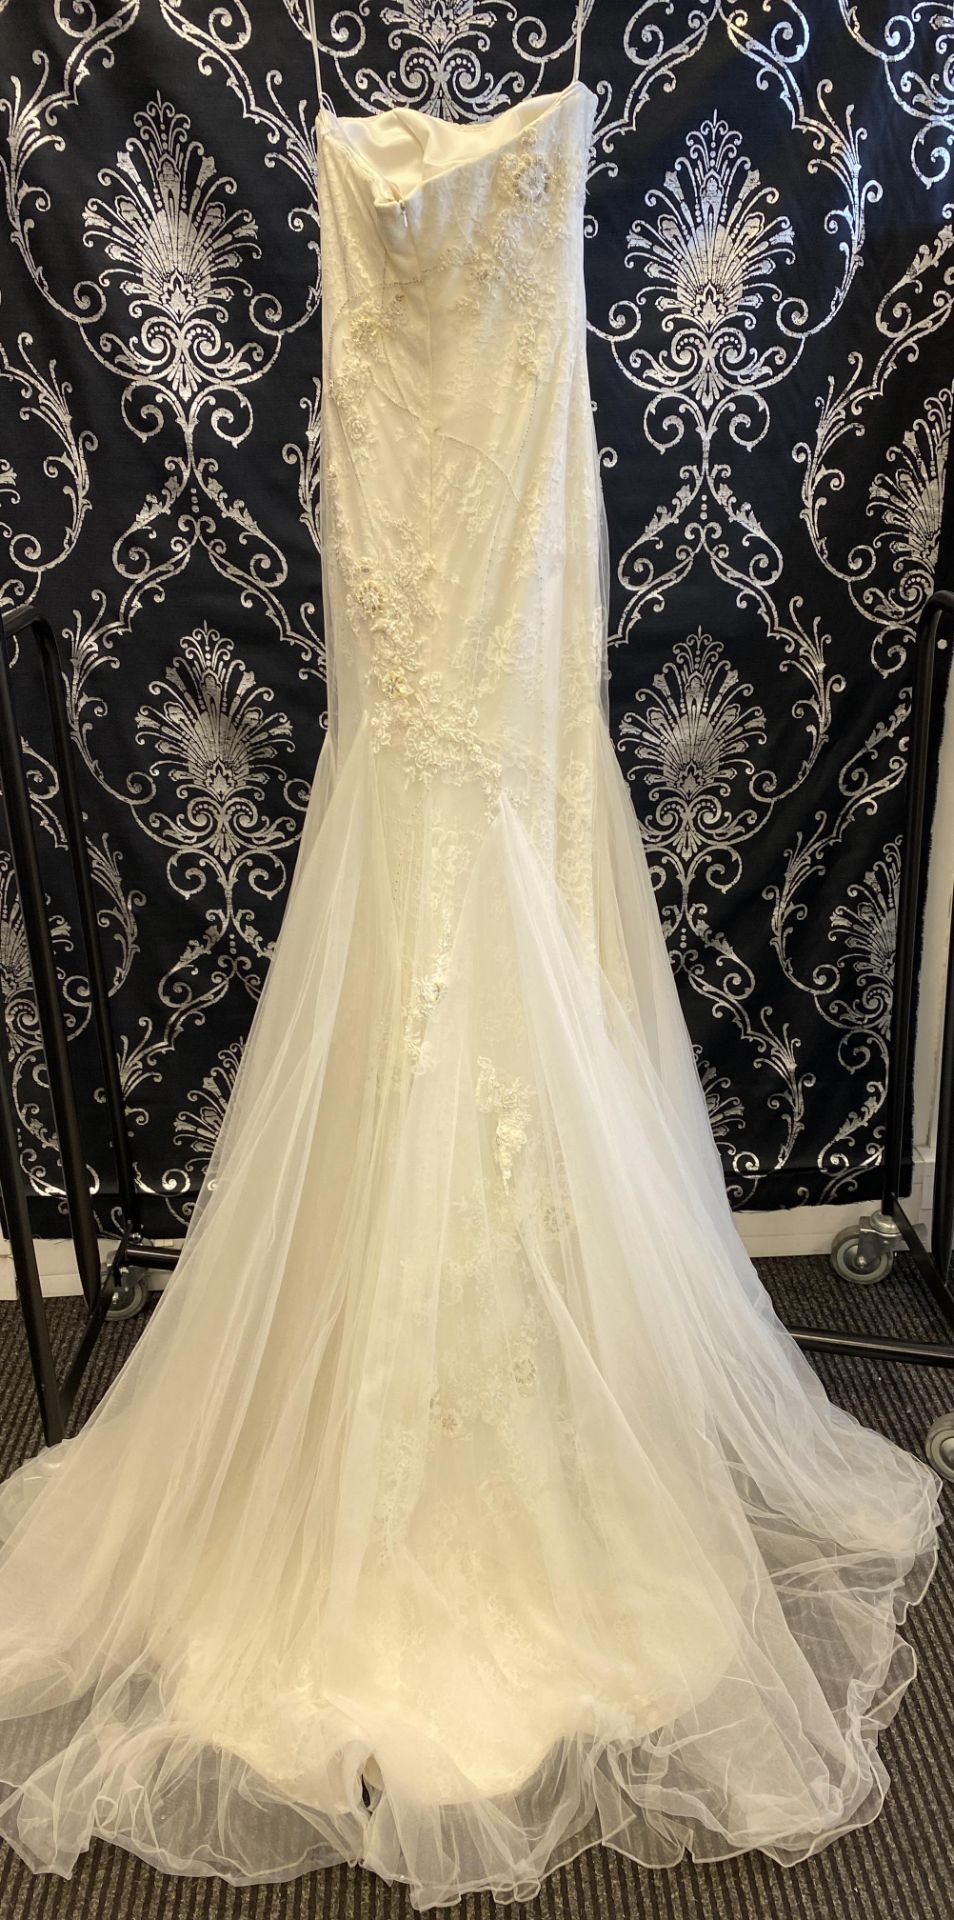 1 x LUSAN MANDONGUS Elegant Strapless Lace & Chiffon Fishtail Designer Wedding Dress RRP £1,950 UK12 - Image 4 of 9